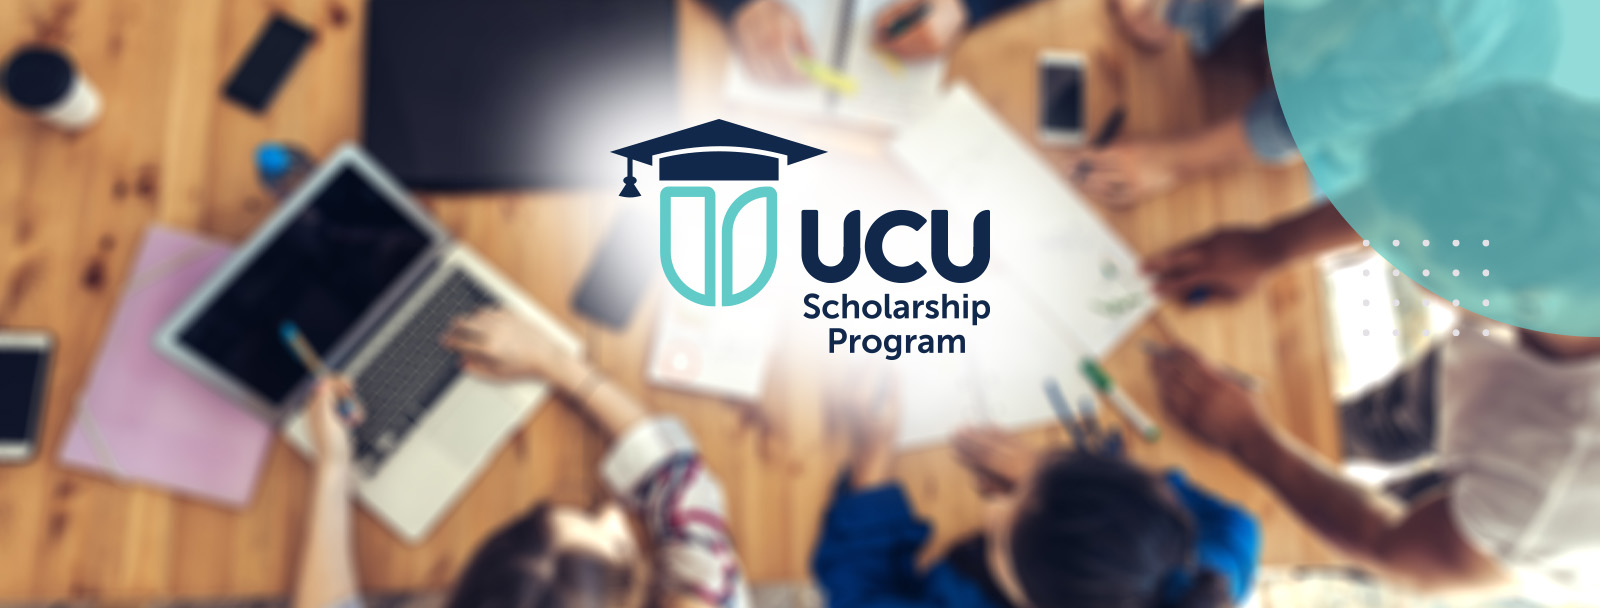 UCU scholarship program